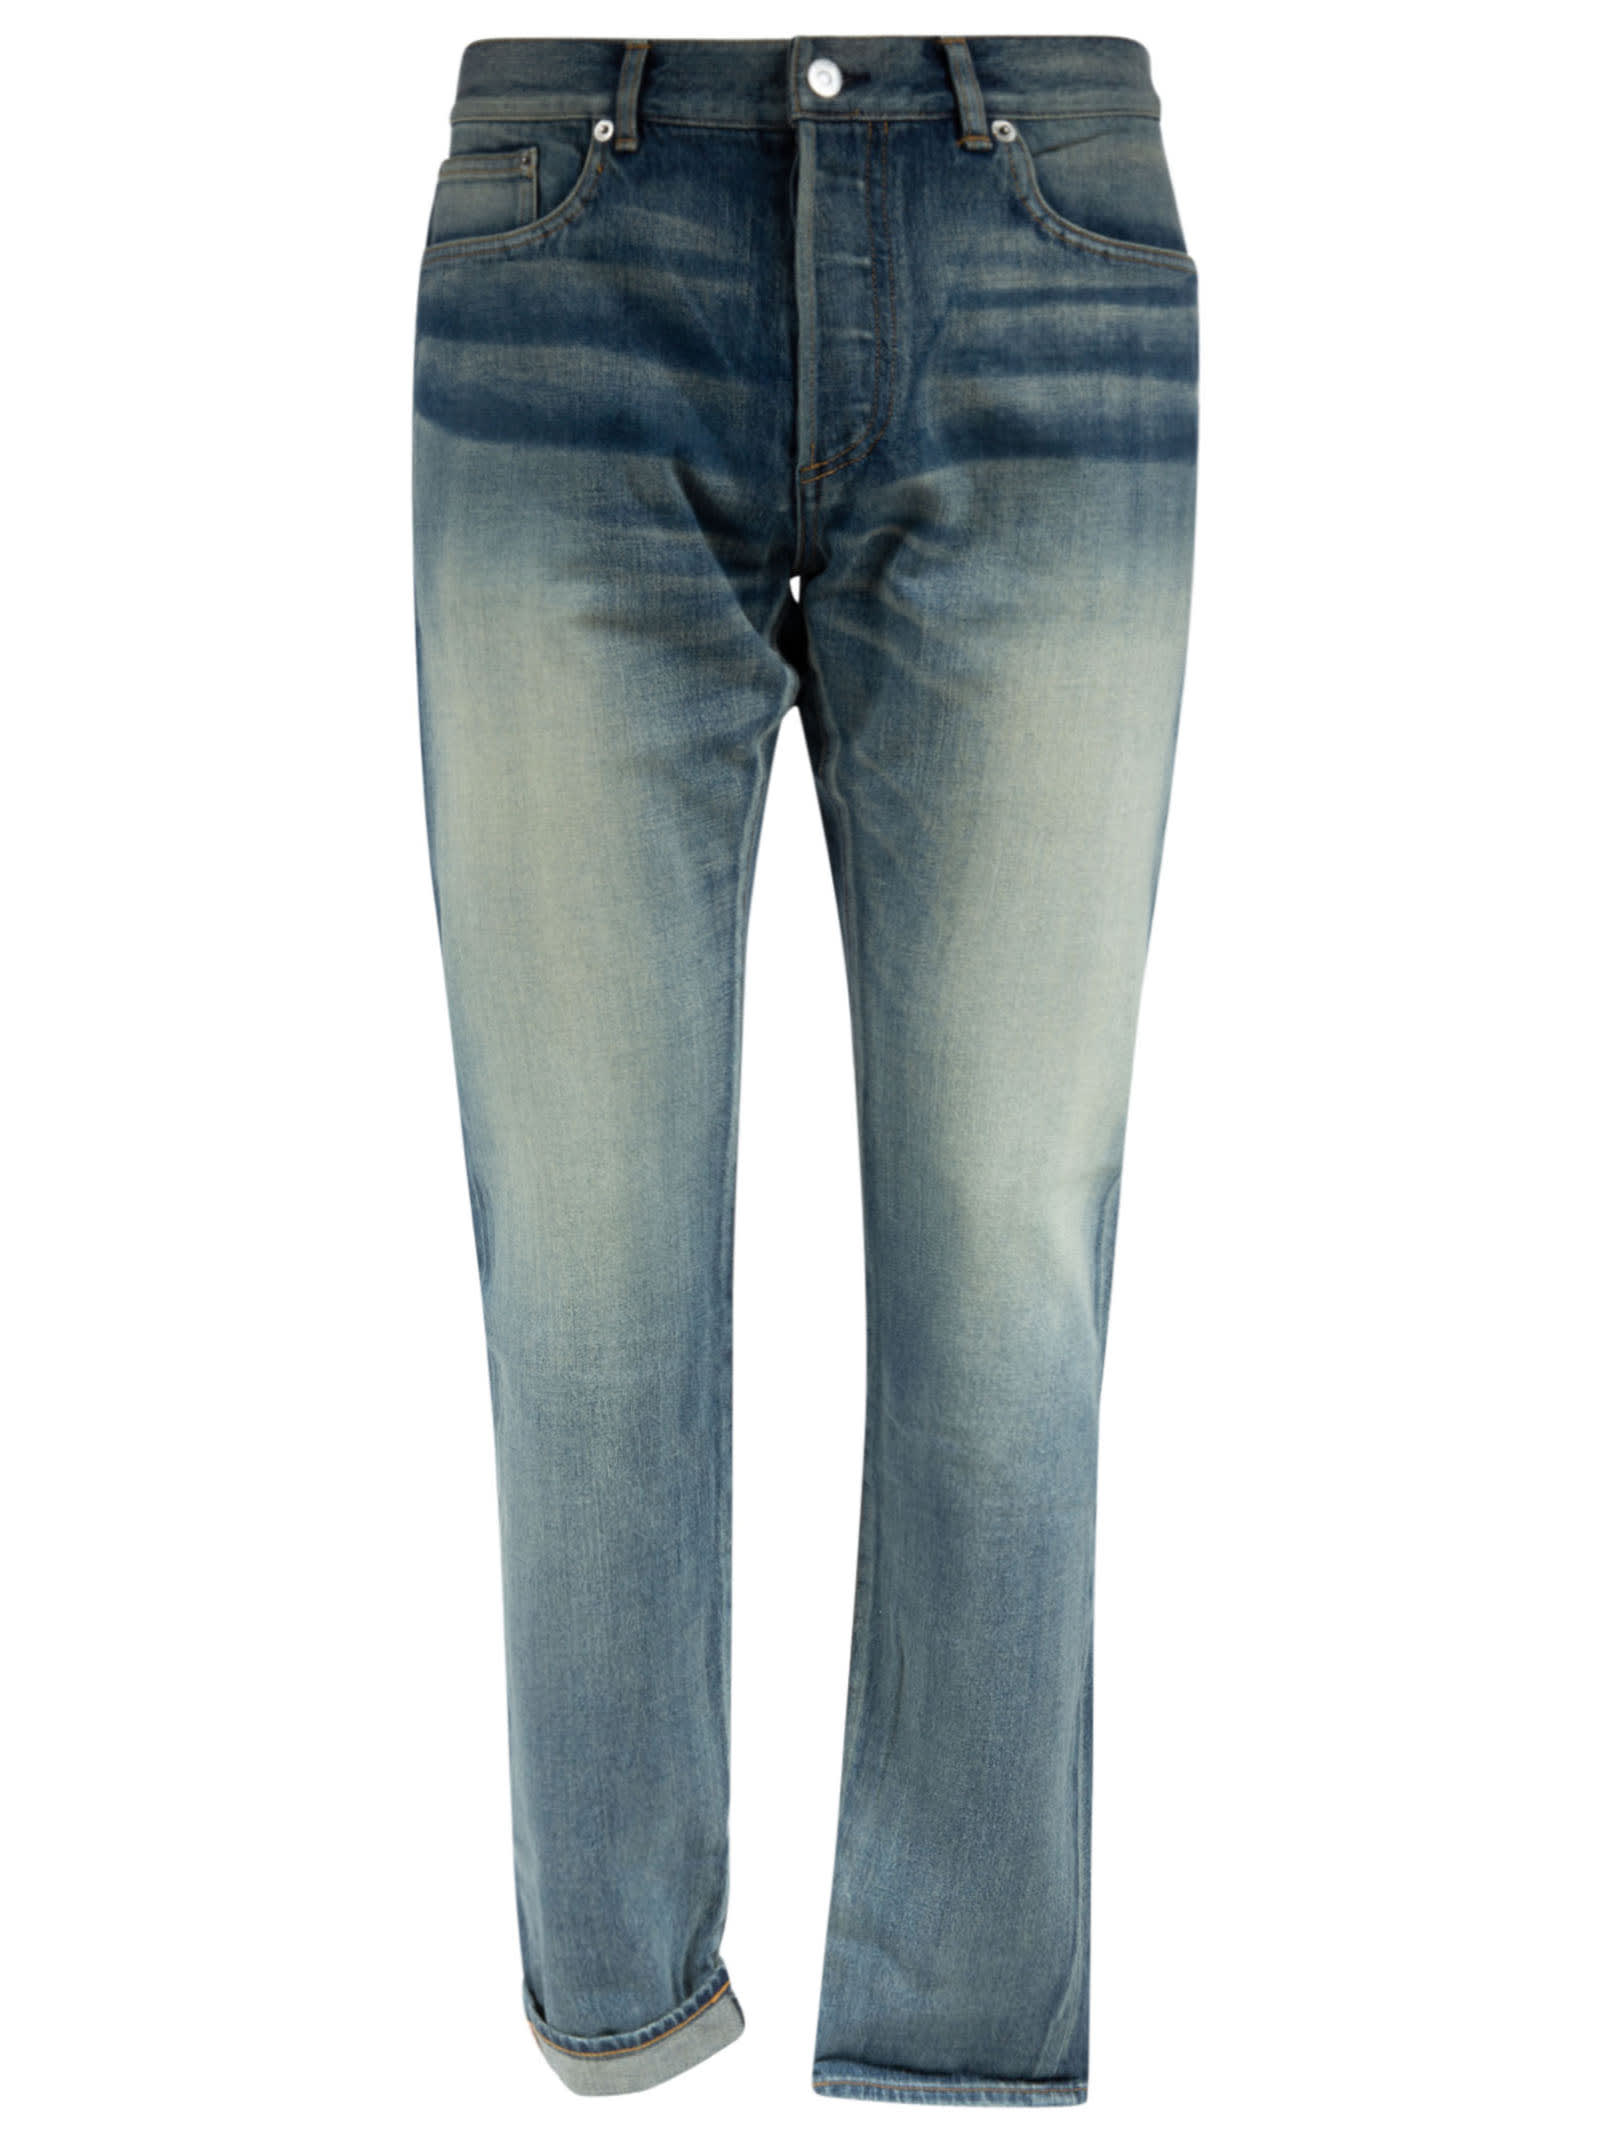 Christian Dior Selvedge Jeans